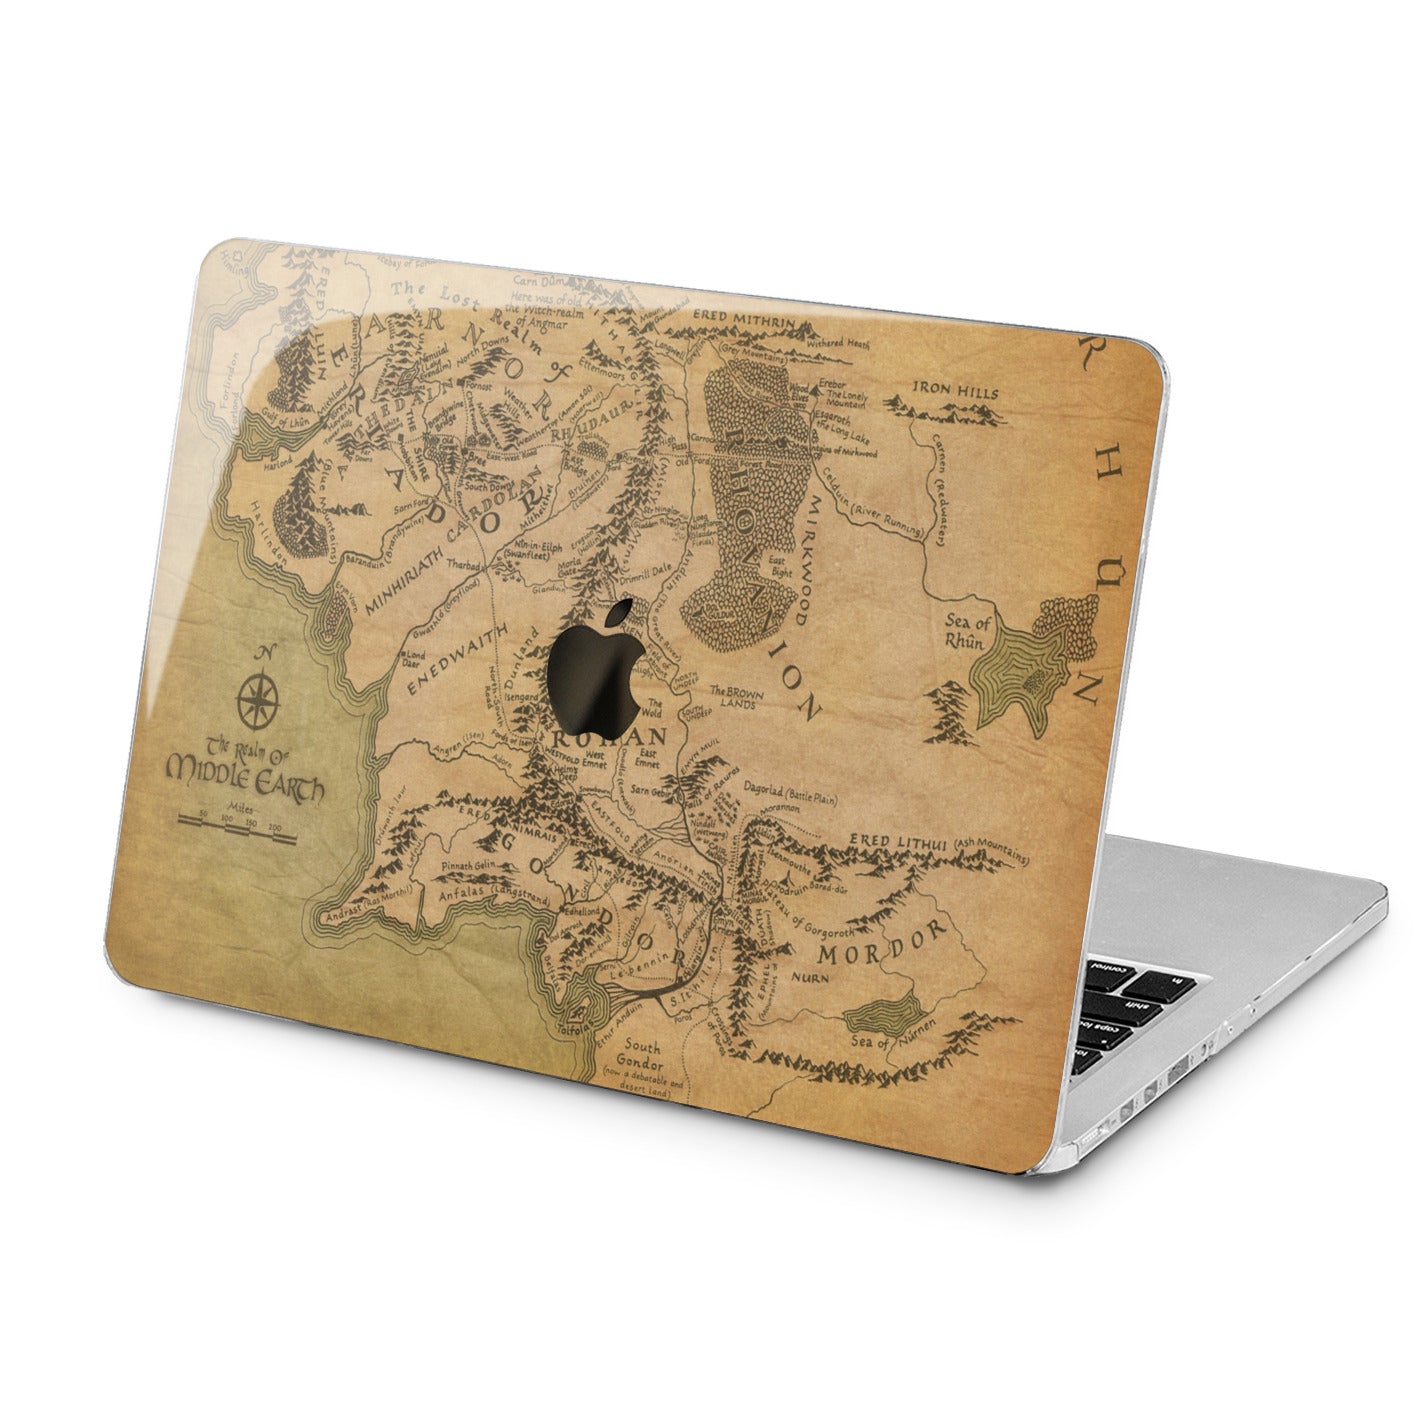 Lex Altern Lex Altern Middle Earth Case for your Laptop Apple Macbook.